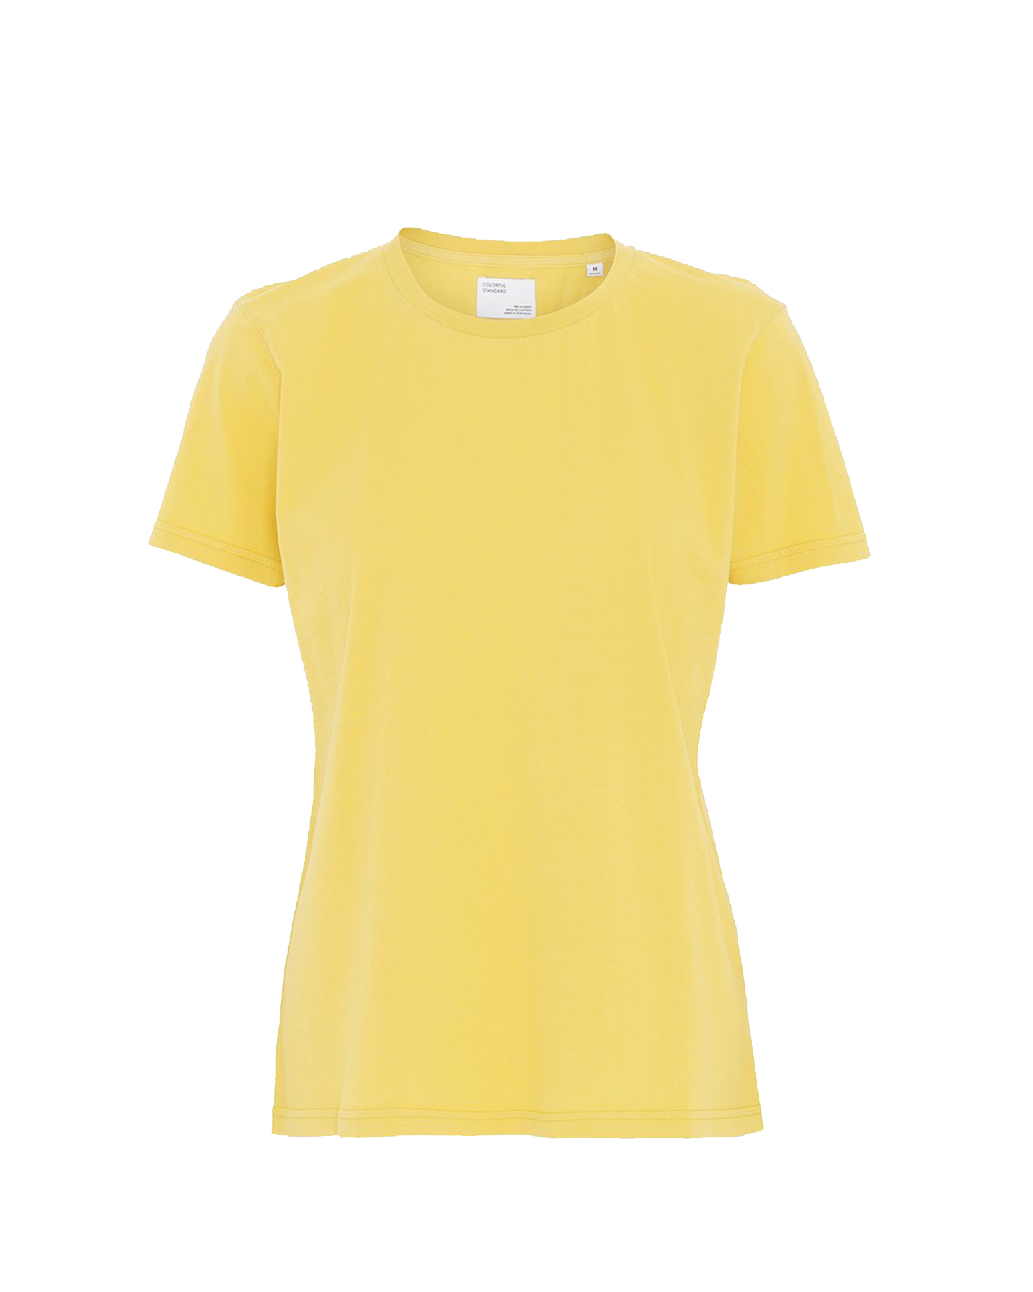 Trouva: Lemon Yellow Women's Short Sleeve T-Shirt